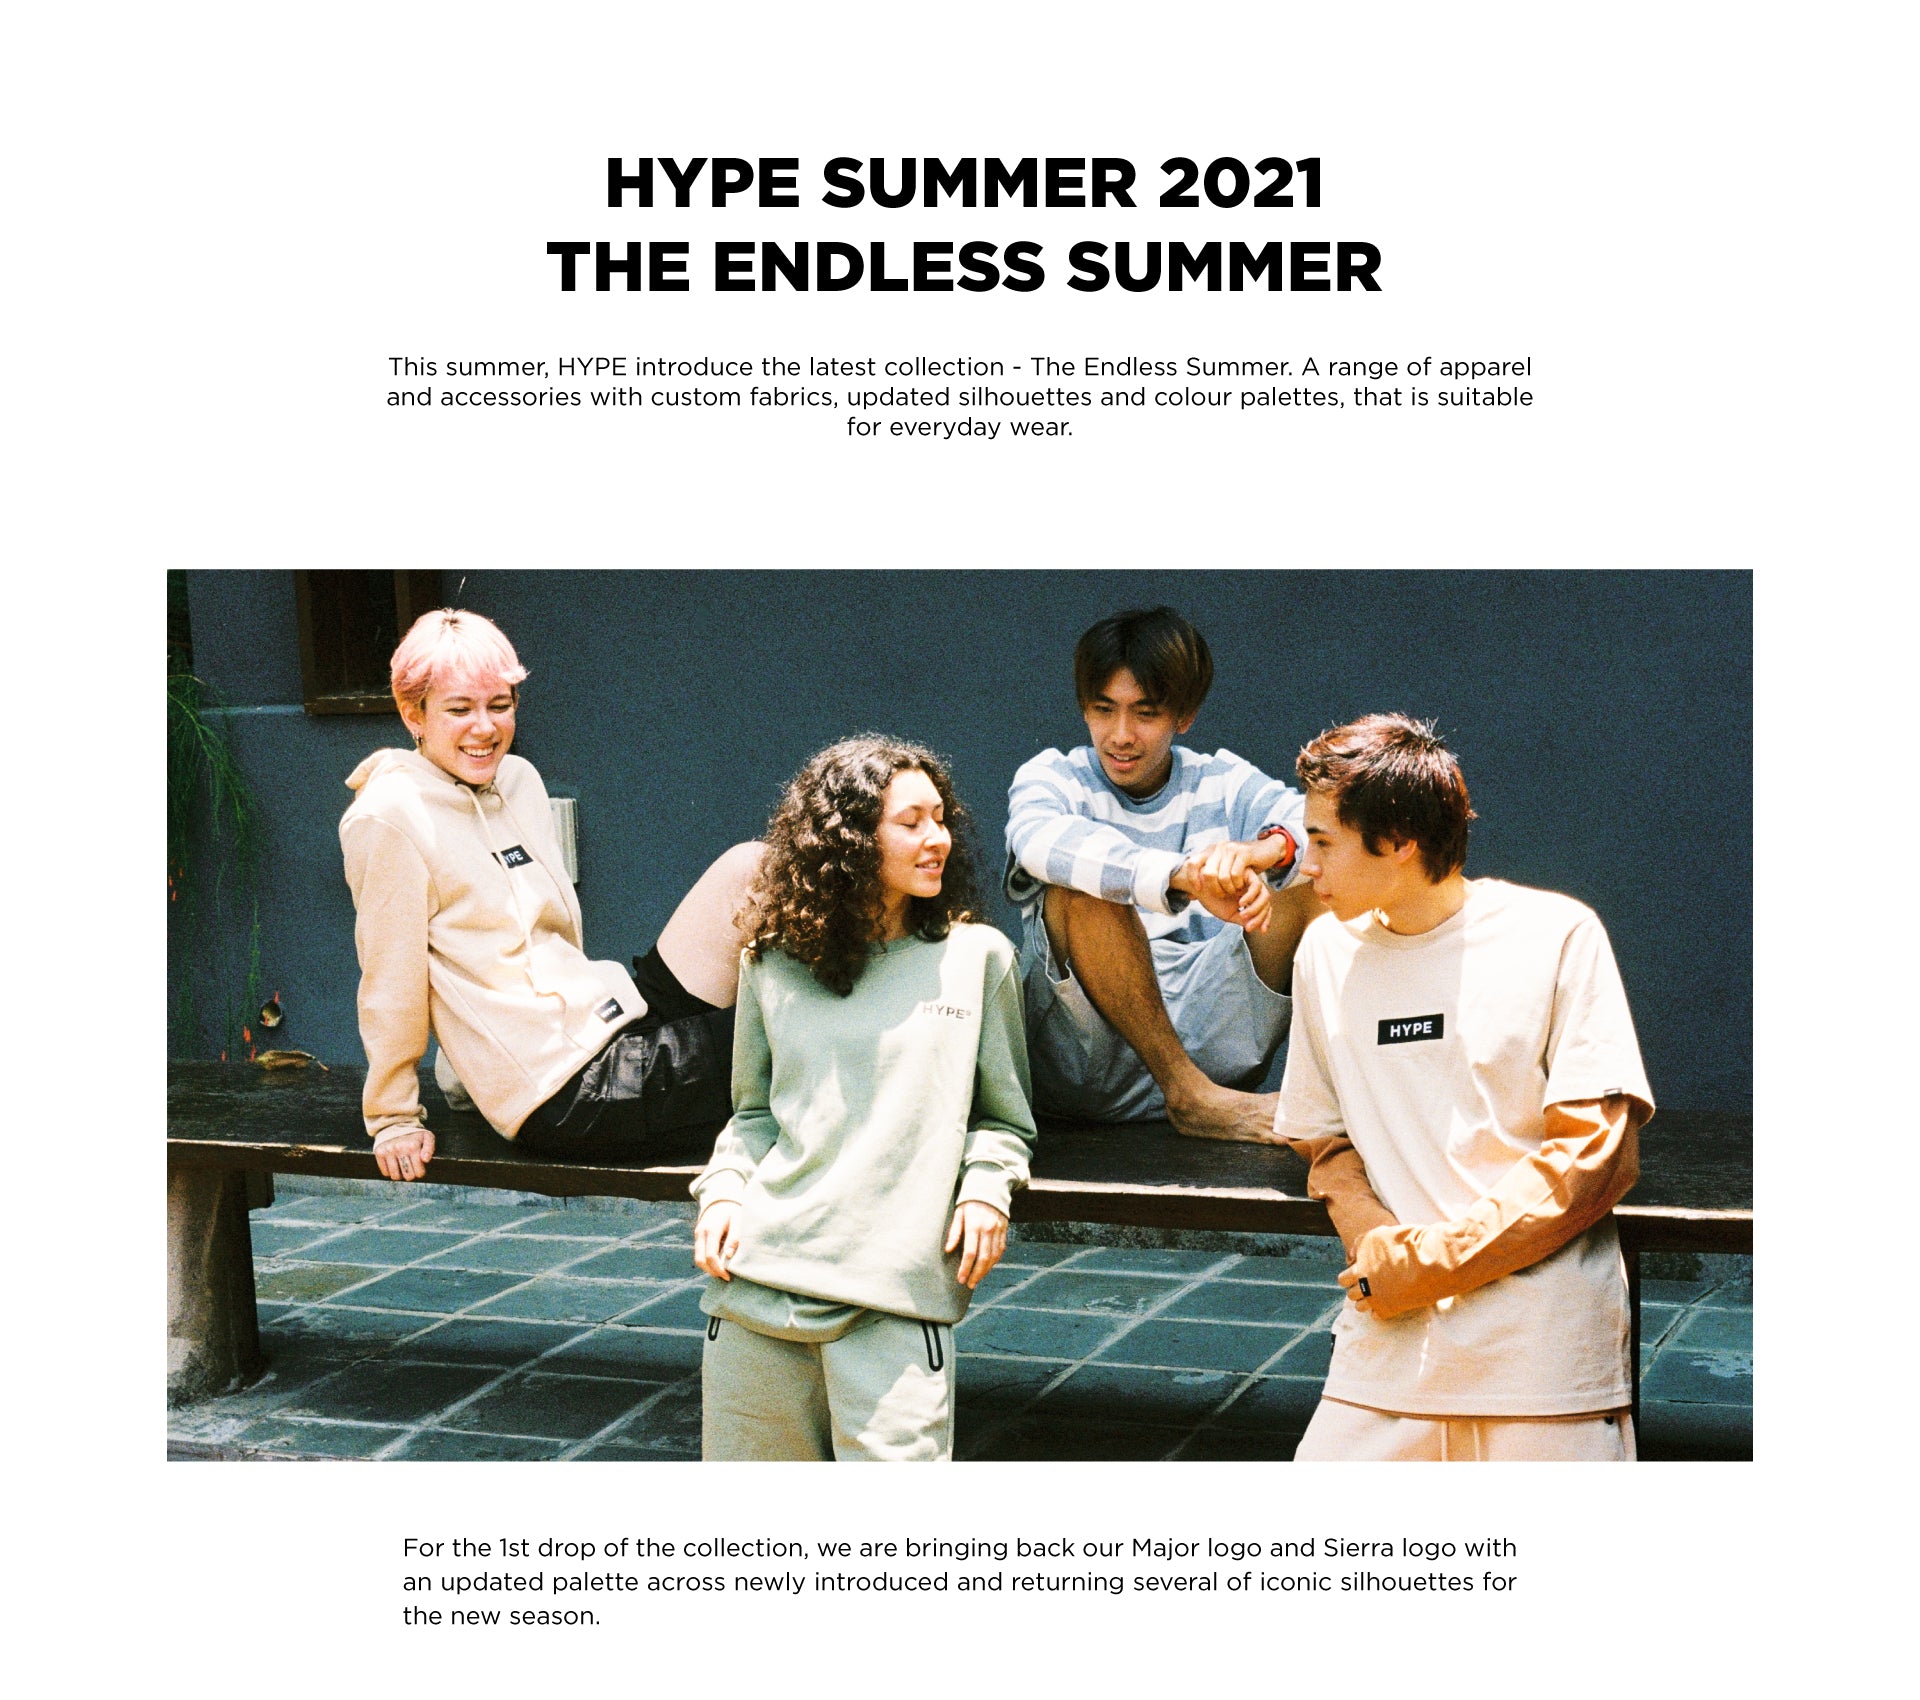 Hype Endless Summer